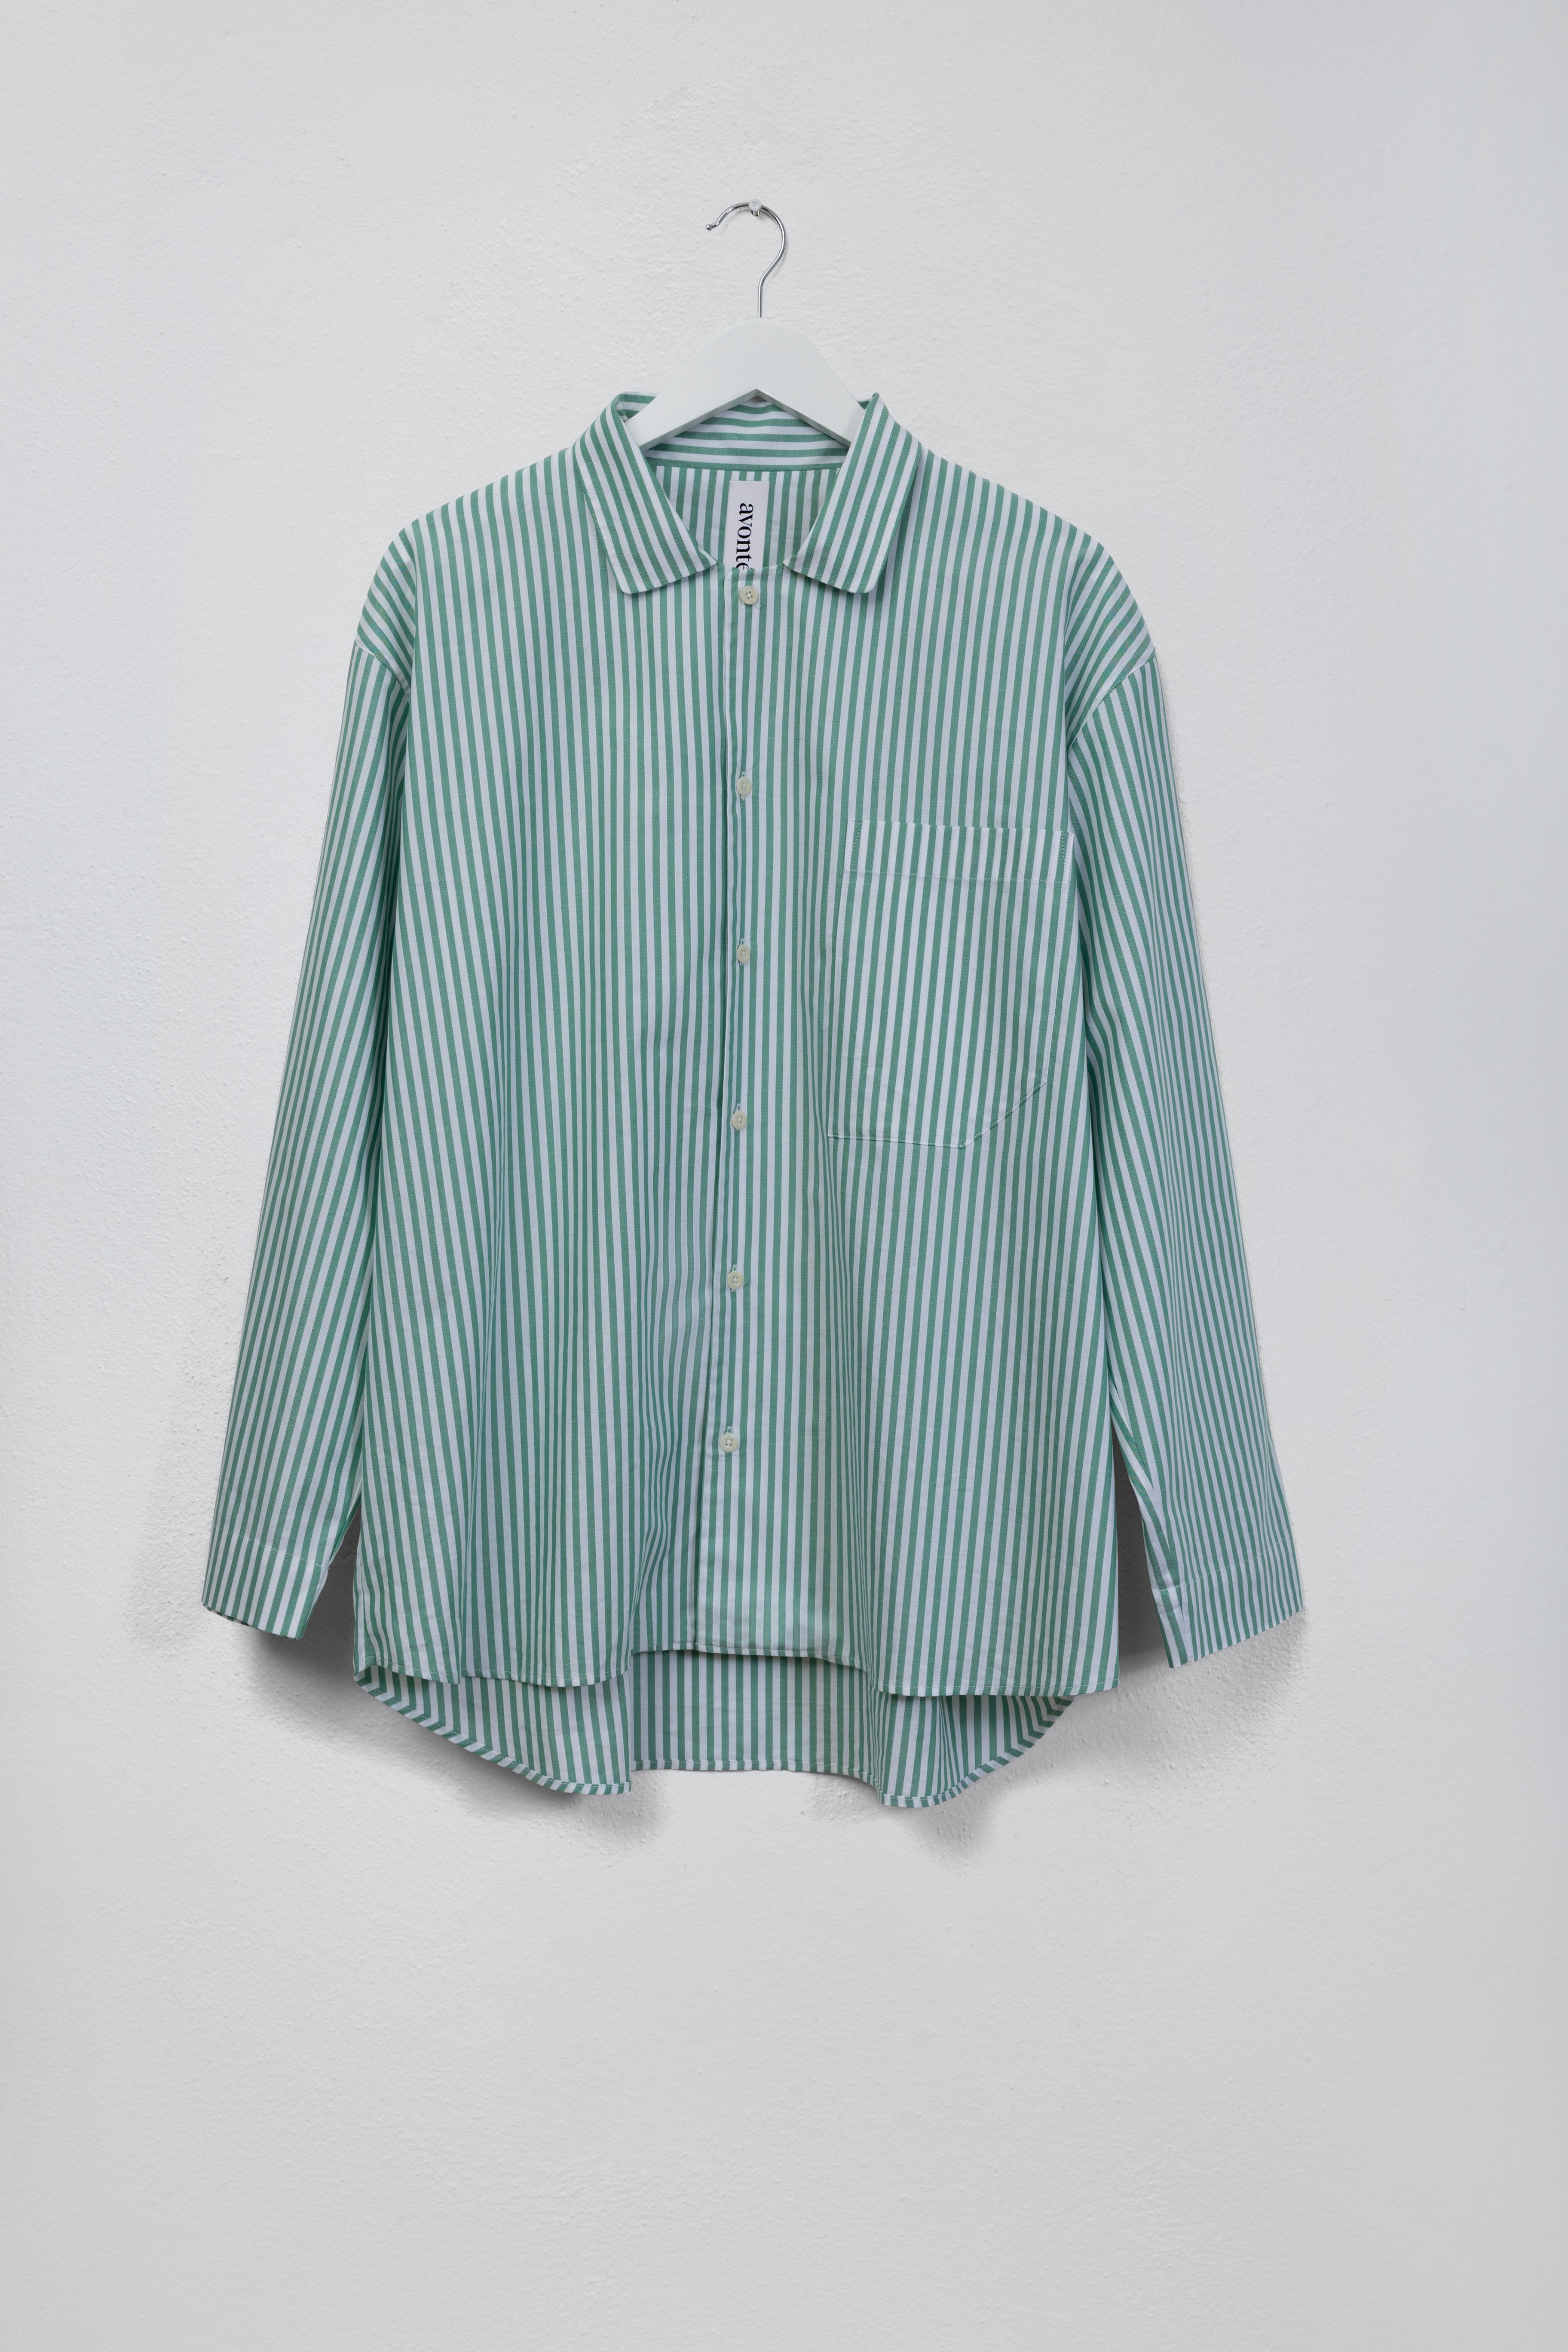 pyjama shirt in color gratitude green stripes_avonte